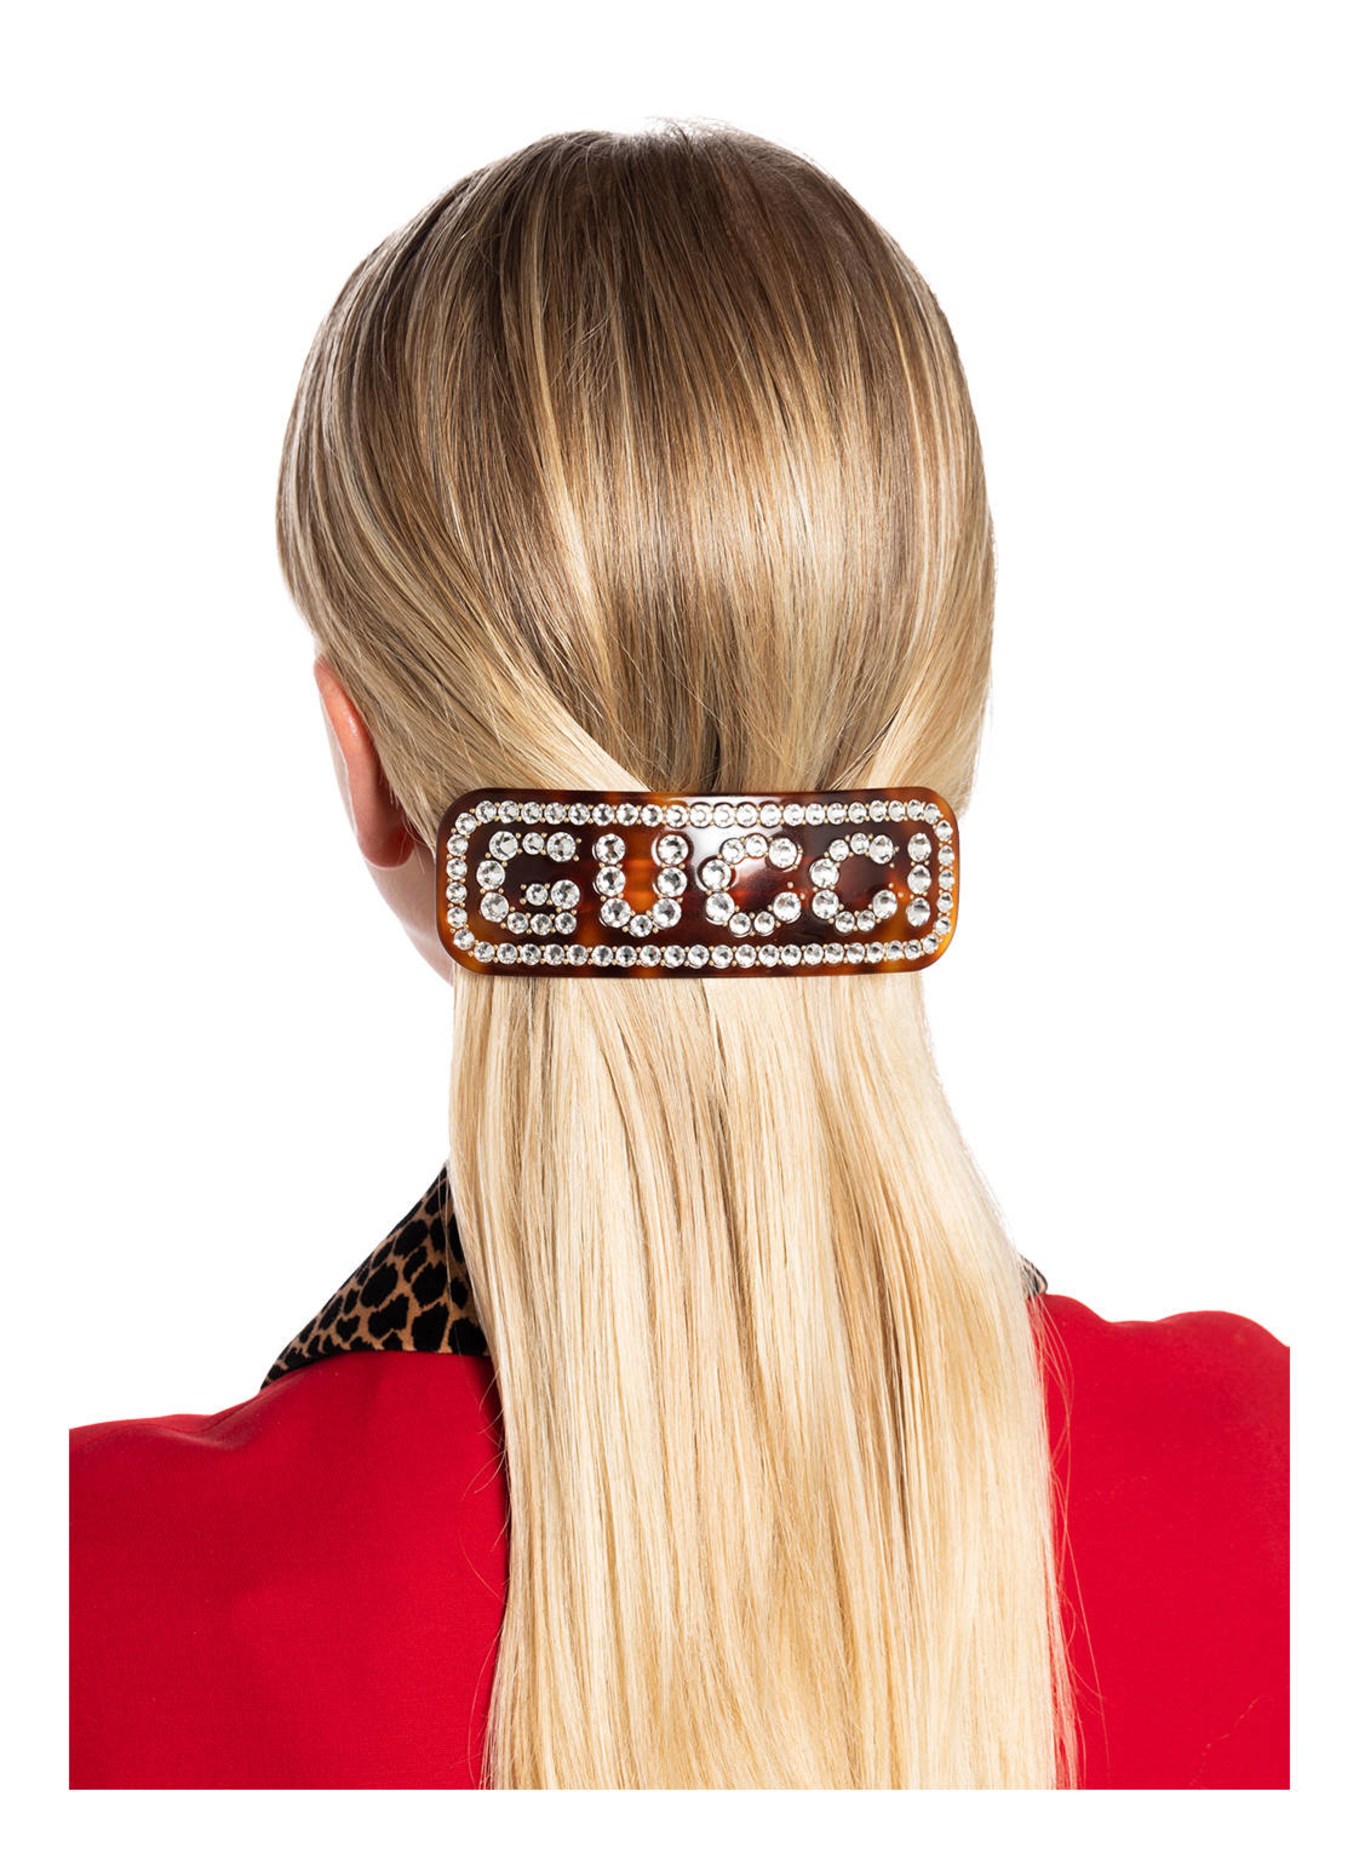 Gucci Logo Crystal Hair Barrette in White